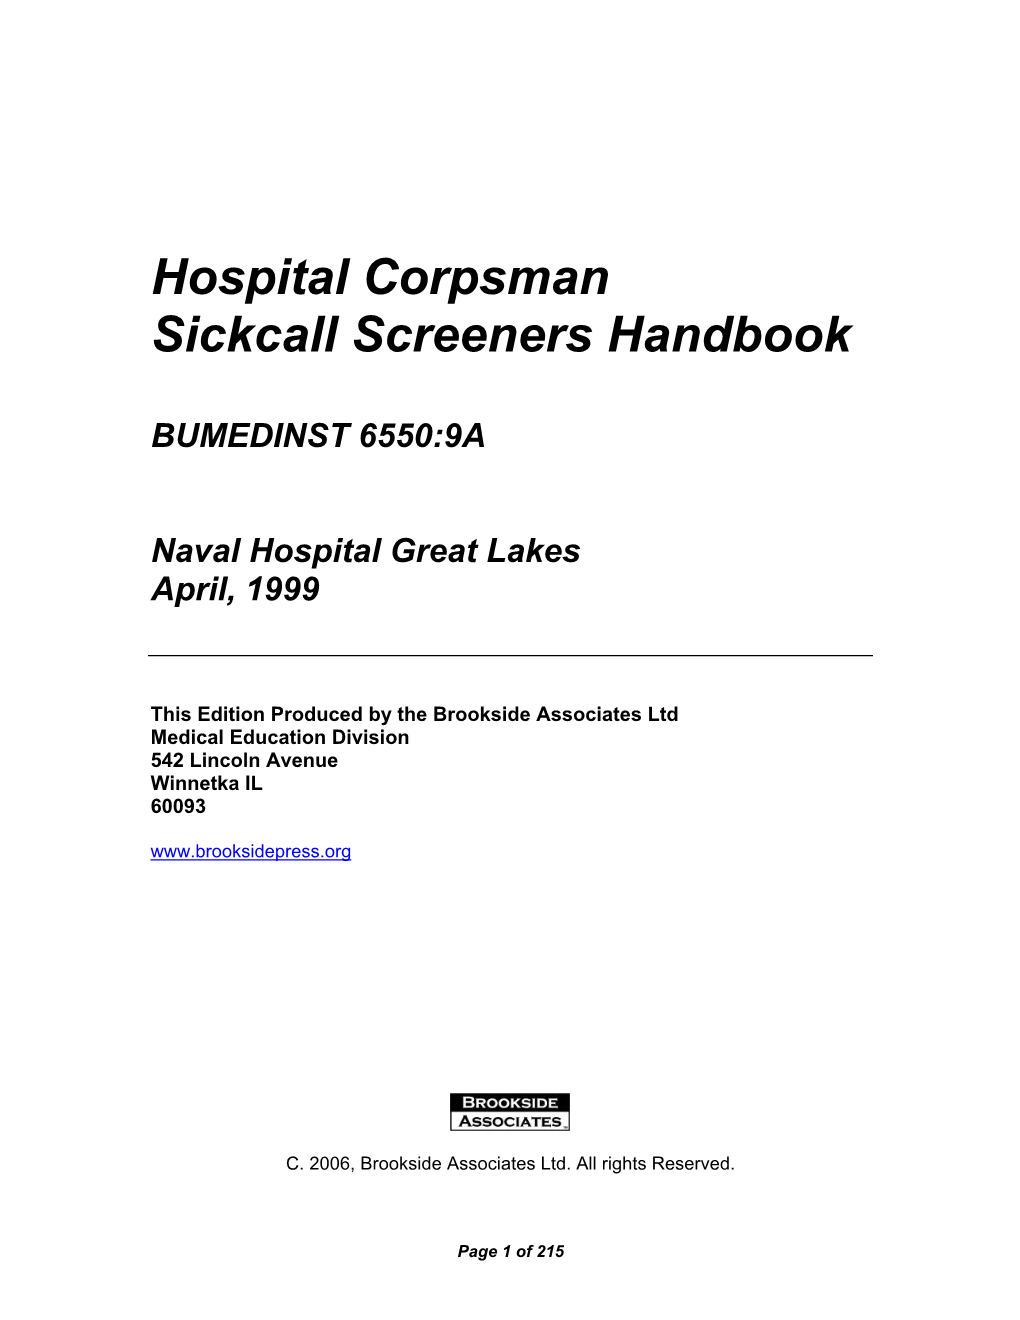 Hospital Corpsman Sickcall Screeners Handbook